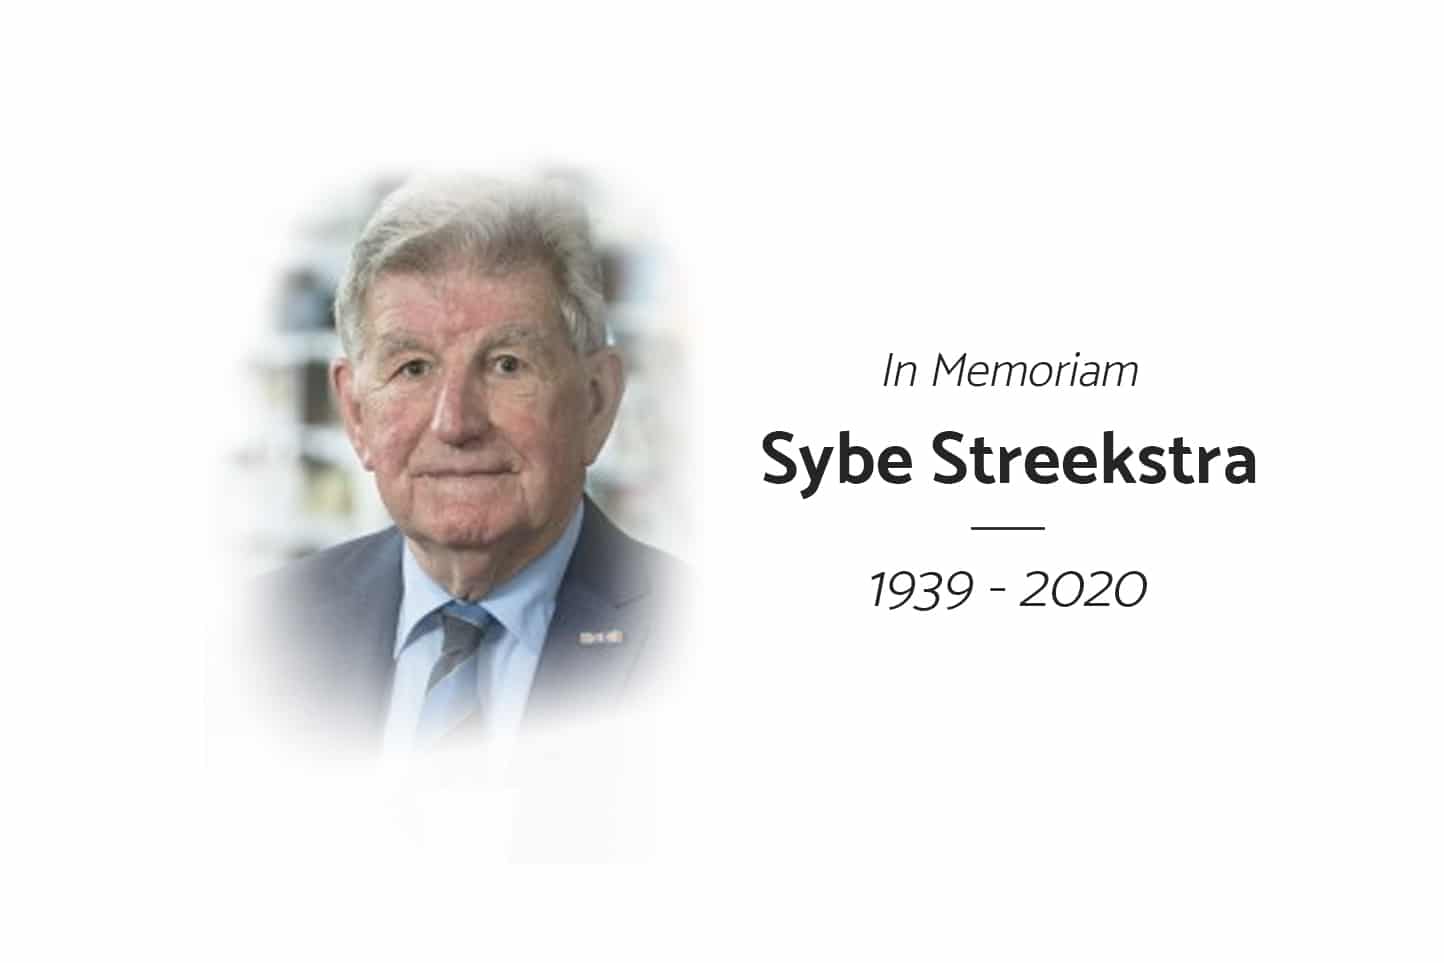 In Memoriam: Sybe Streekstra